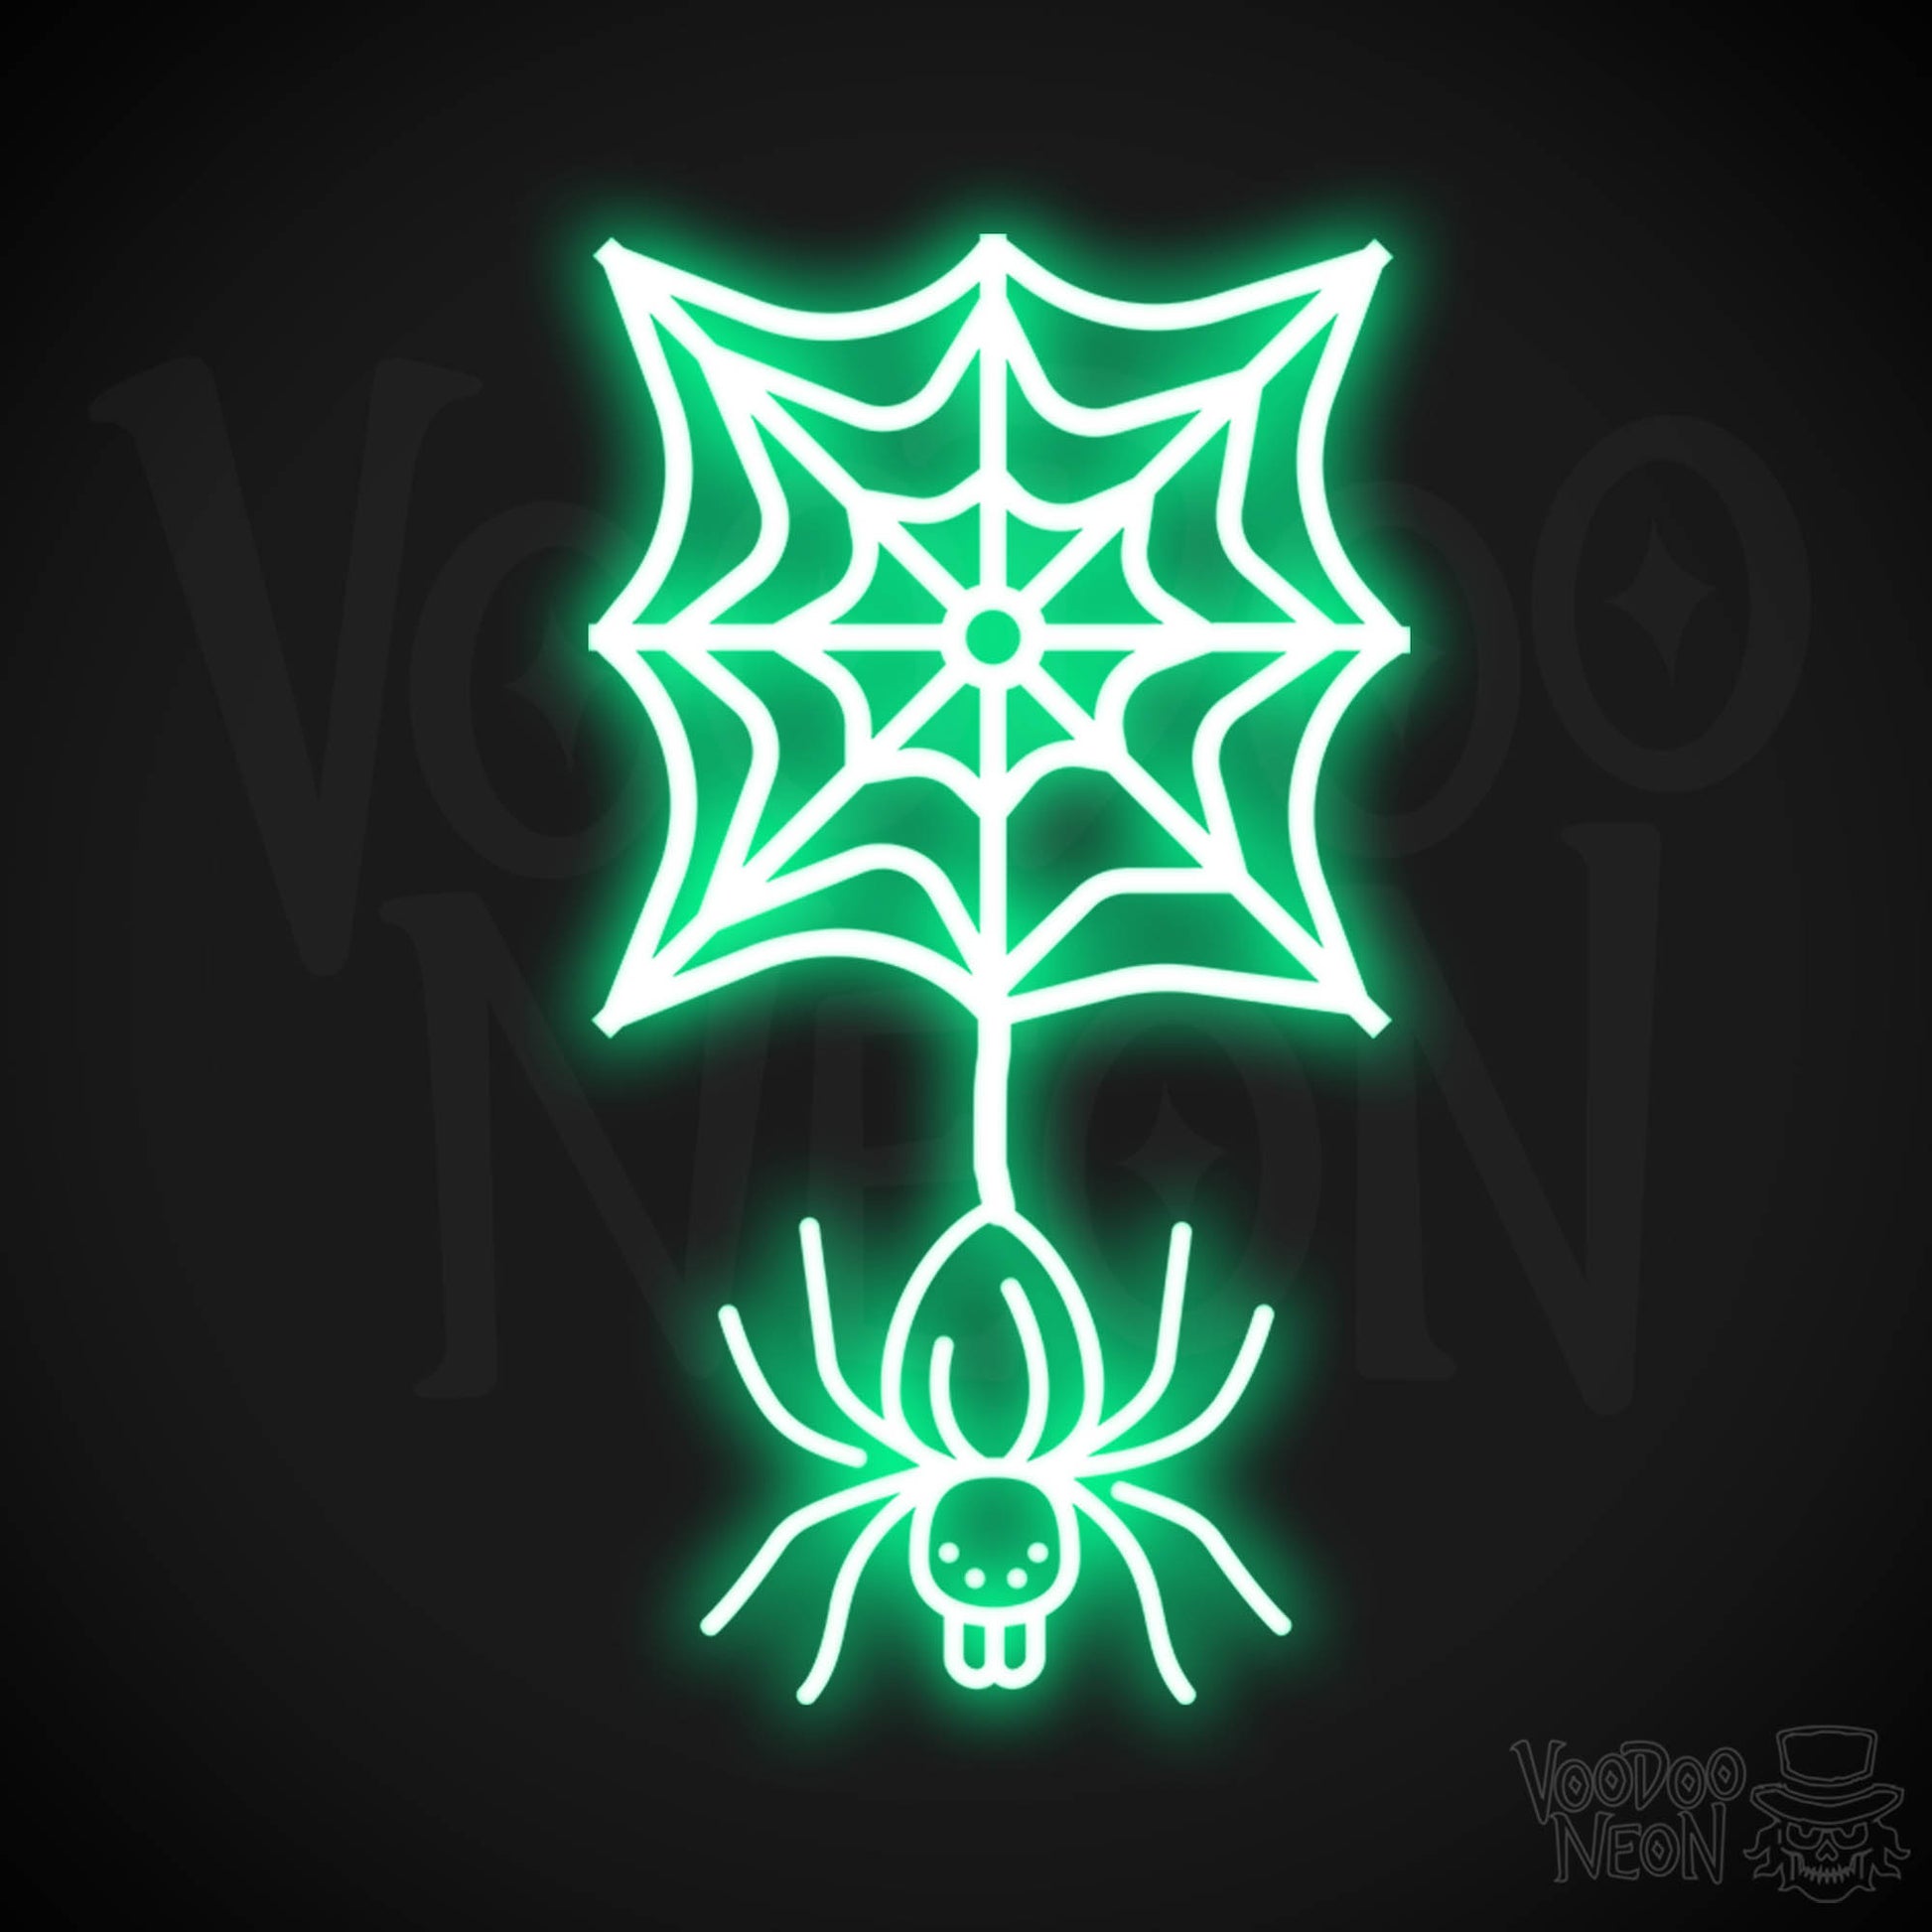 Neon Spider - Spider Neon Sign - Halloween LED Neon Spider - Color Green